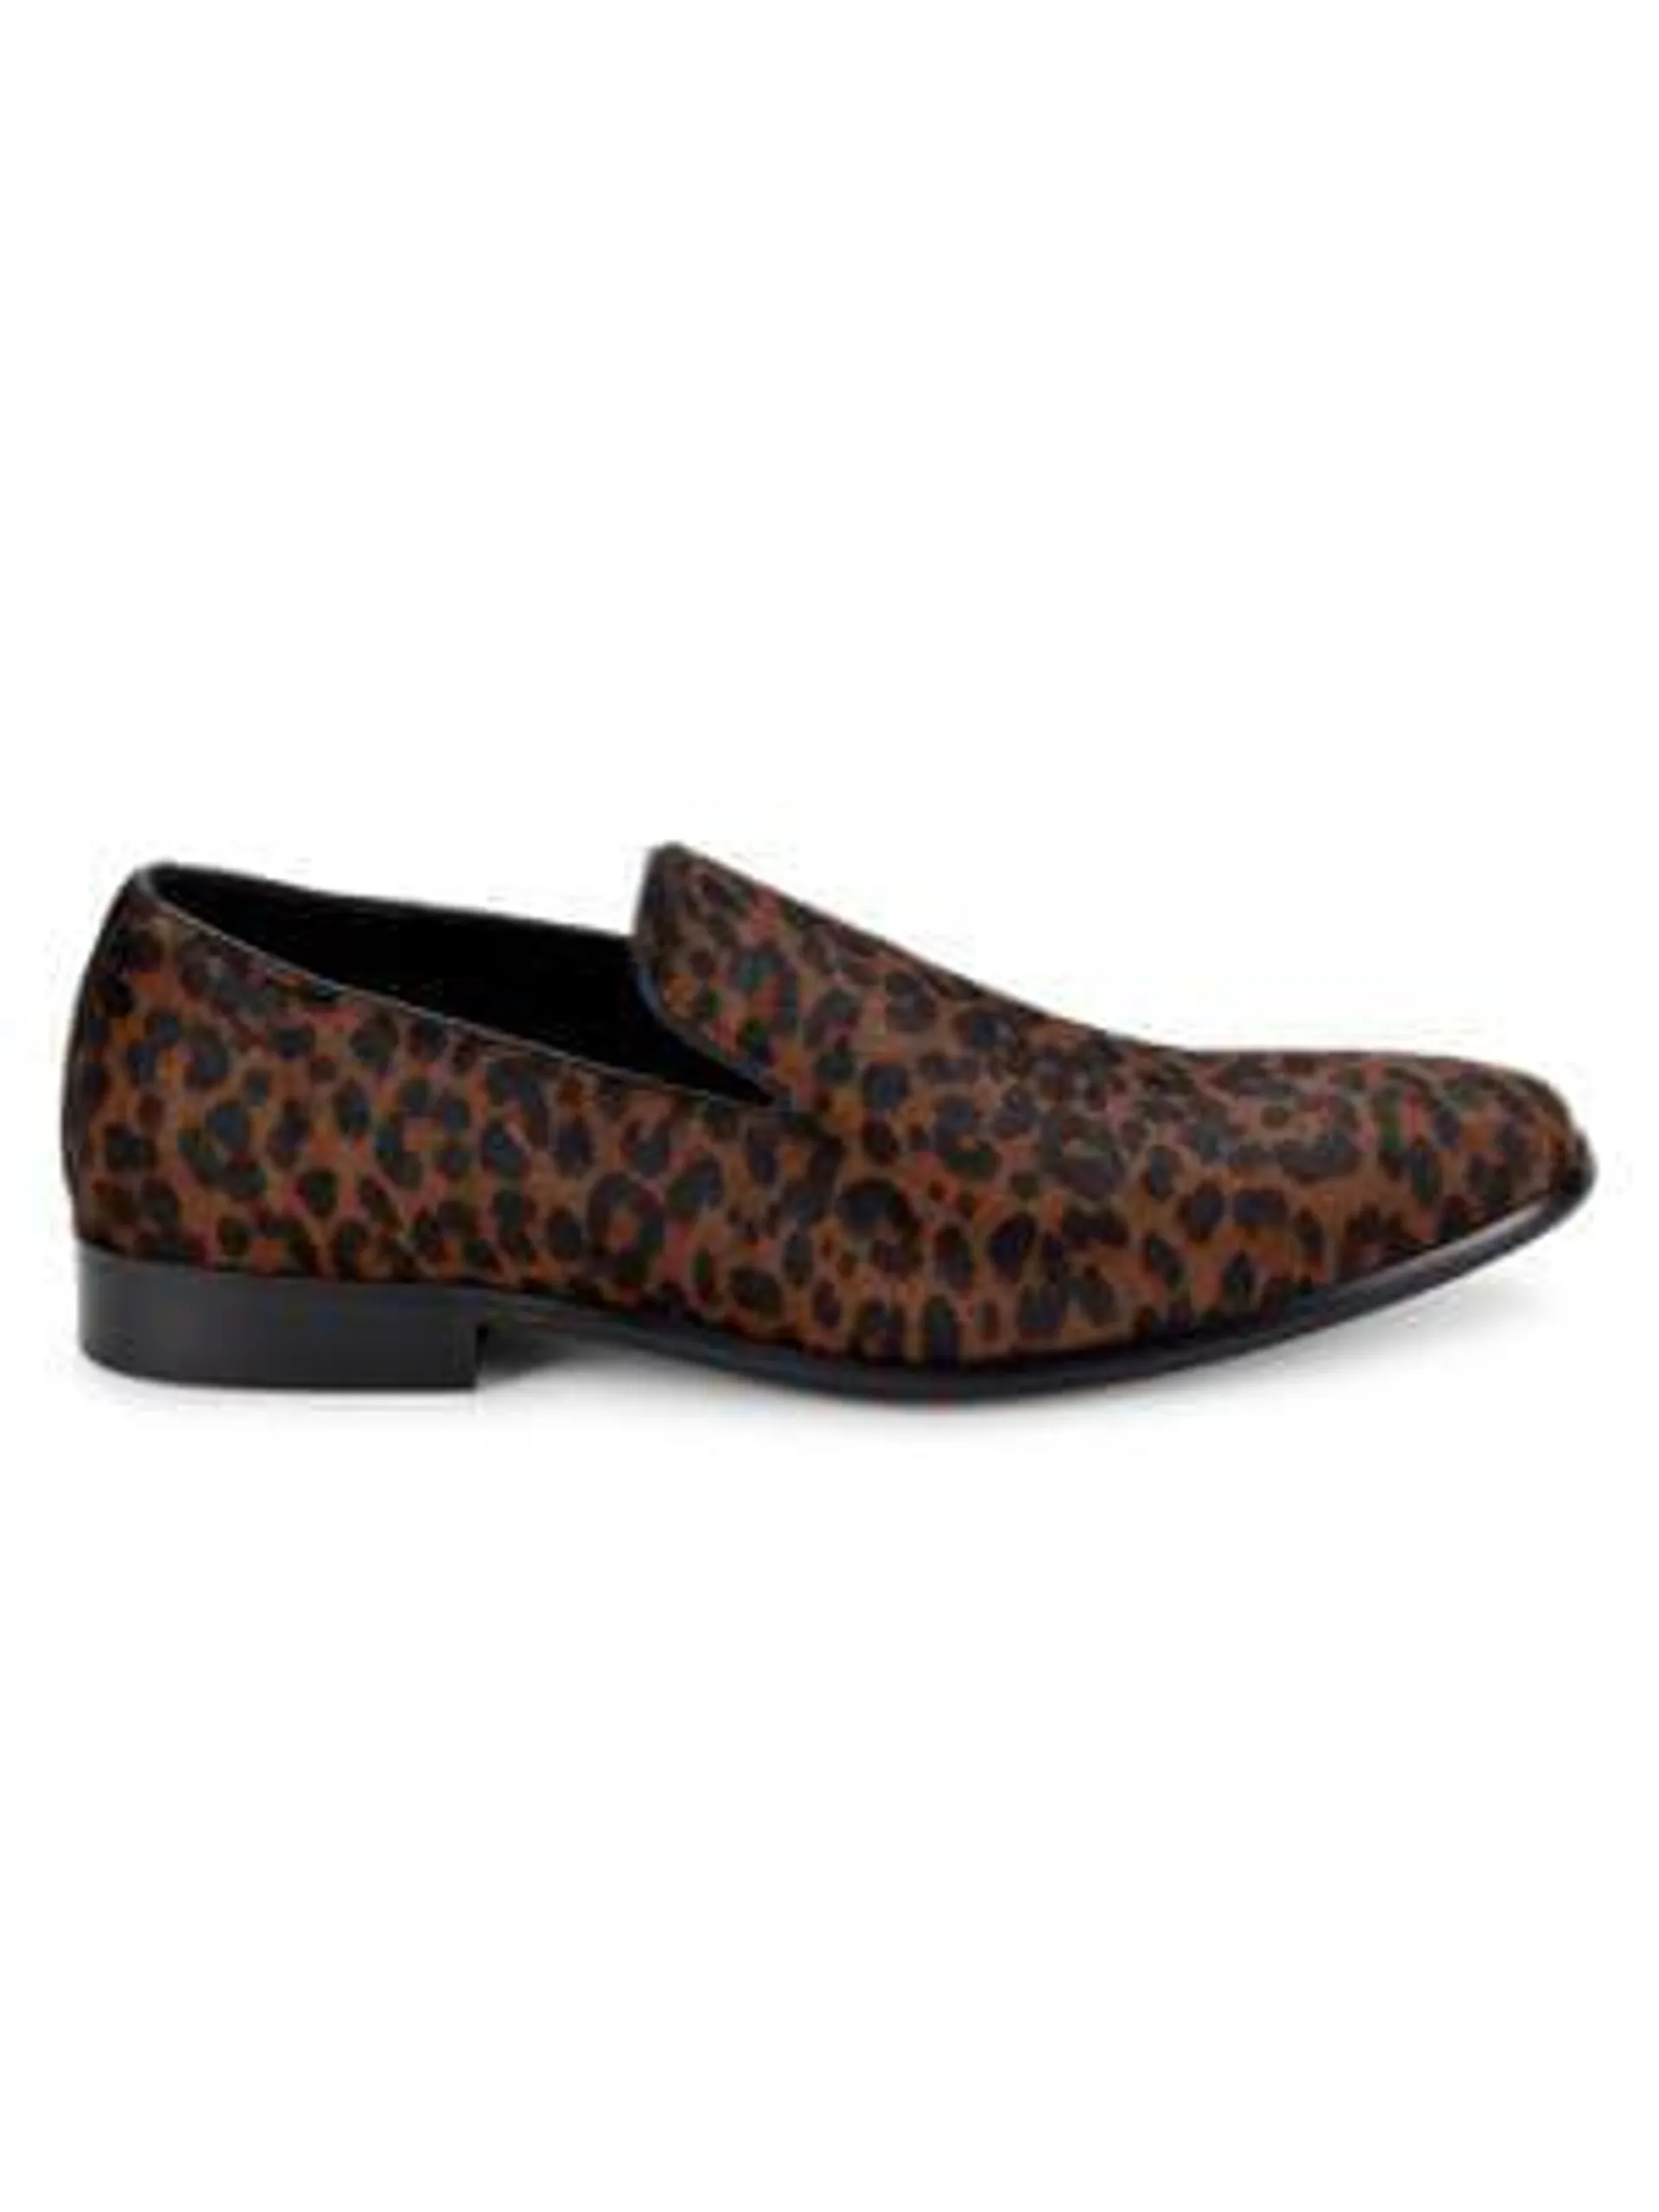 Simba Leopard Print Calf Hair Loafers